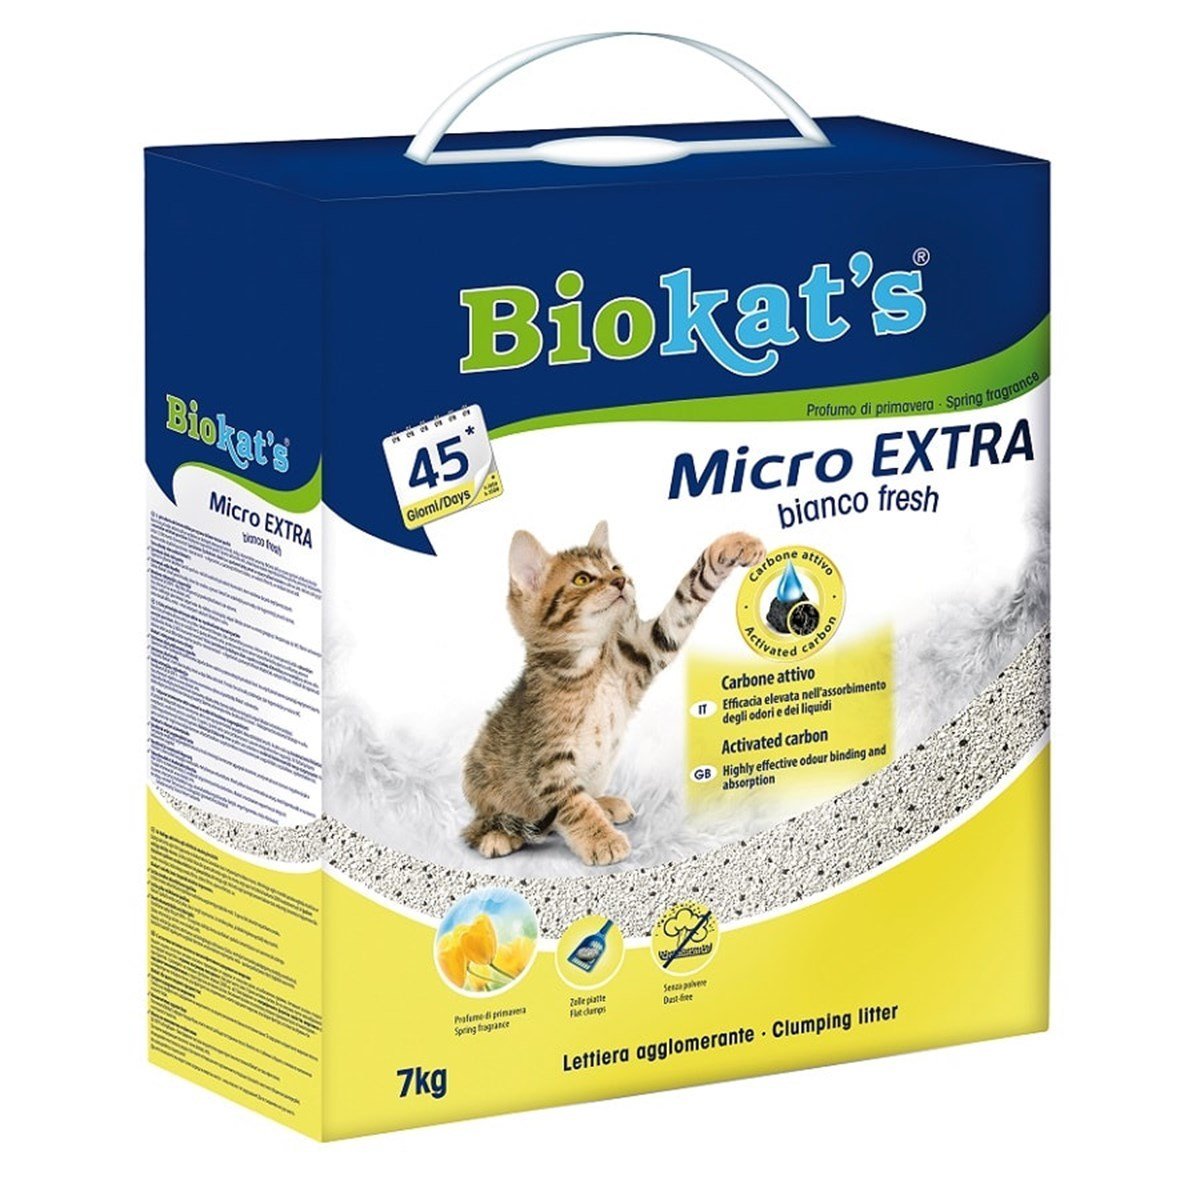 Biokats Bianco Extra Fresh Micro Kedi Kumu 7 Kg Petza